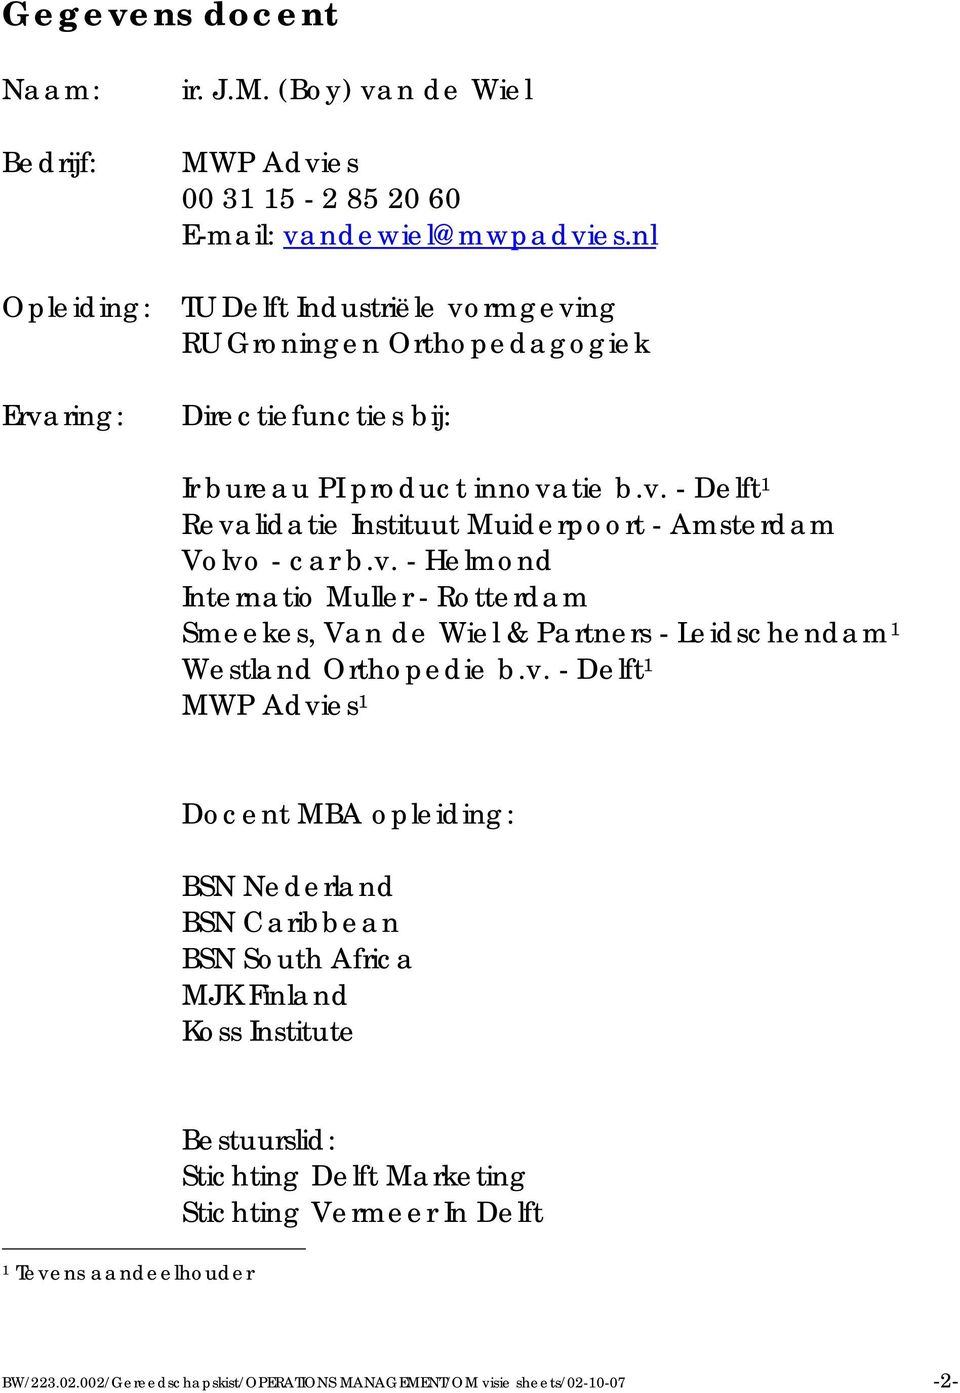 v. - Helmond Internatio Muller - Rotterdam Smeekes, Van de Wiel & Partners - Leidschendam 1 Westland Orthopedie b.v. - Delft 1 MWP Advies 1 Docent MBA opleiding: BSN Nederland BSN